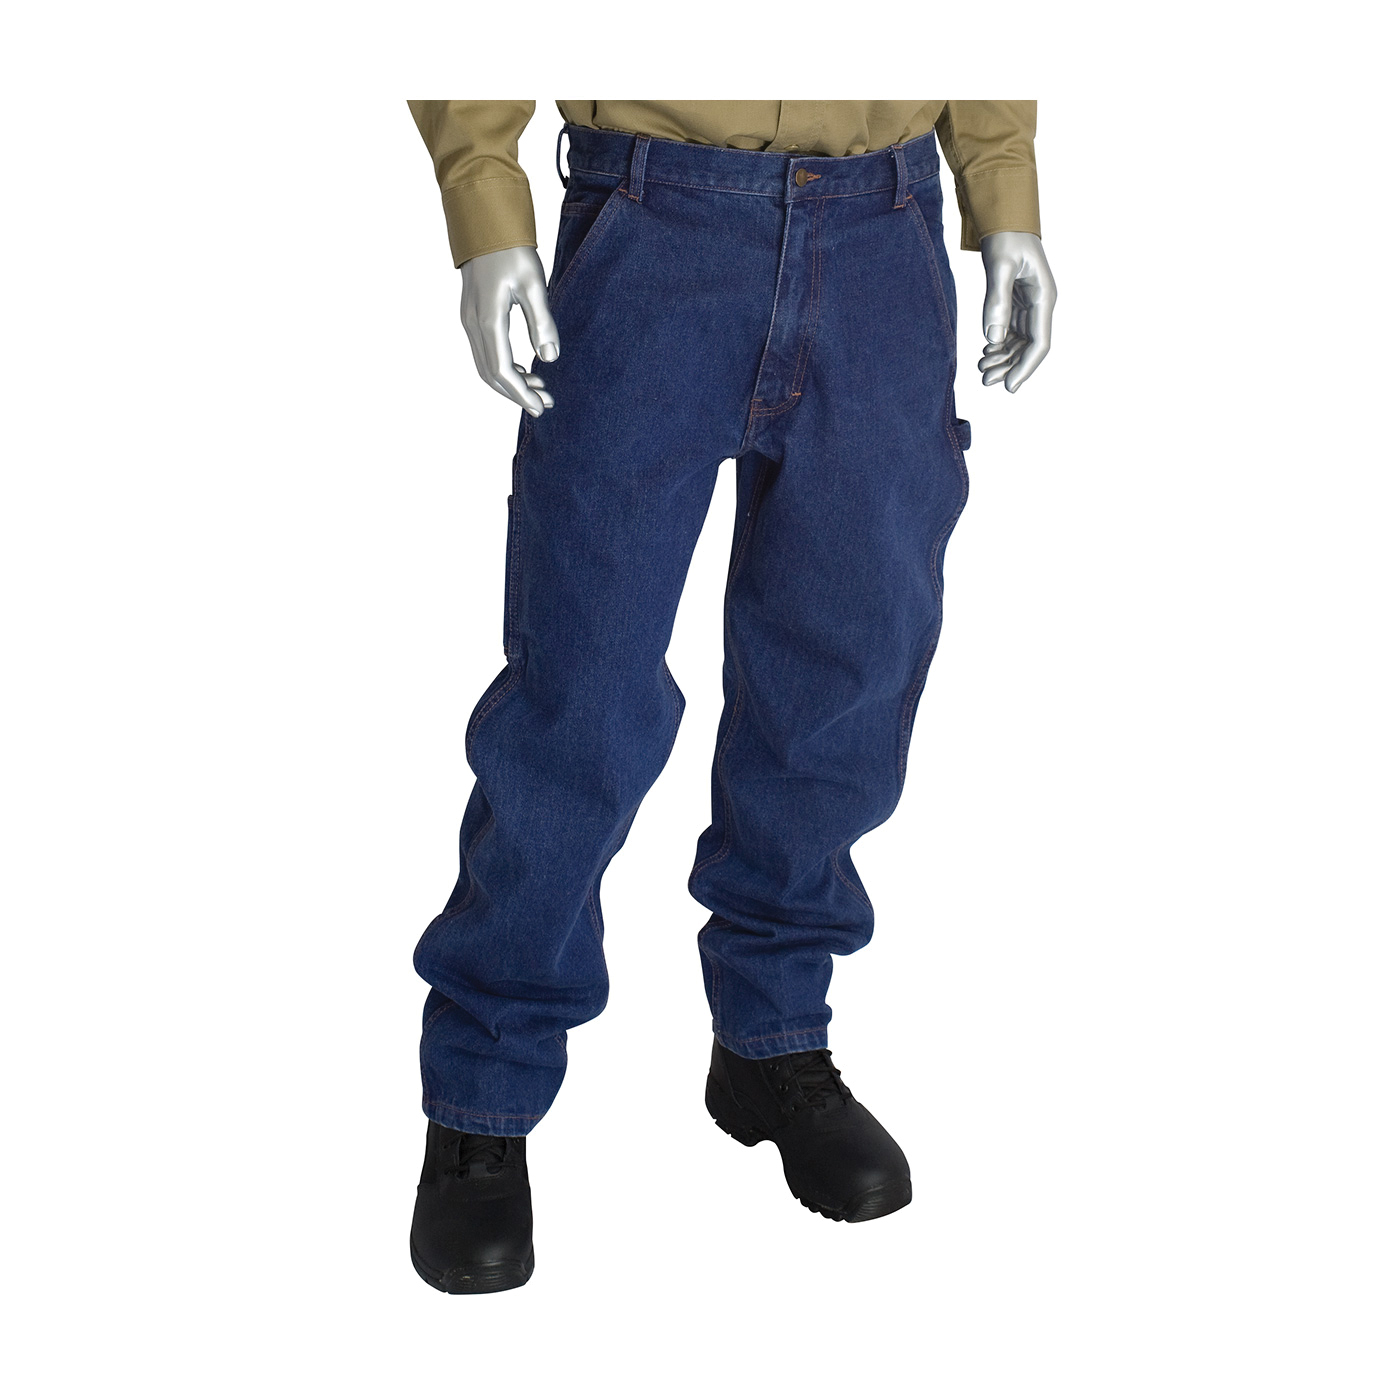 PIP® 385-FRCJ-4436 Carpenter Jeans, 44 in Waist, 36 in L Inseam, Blue Denim, Cotton